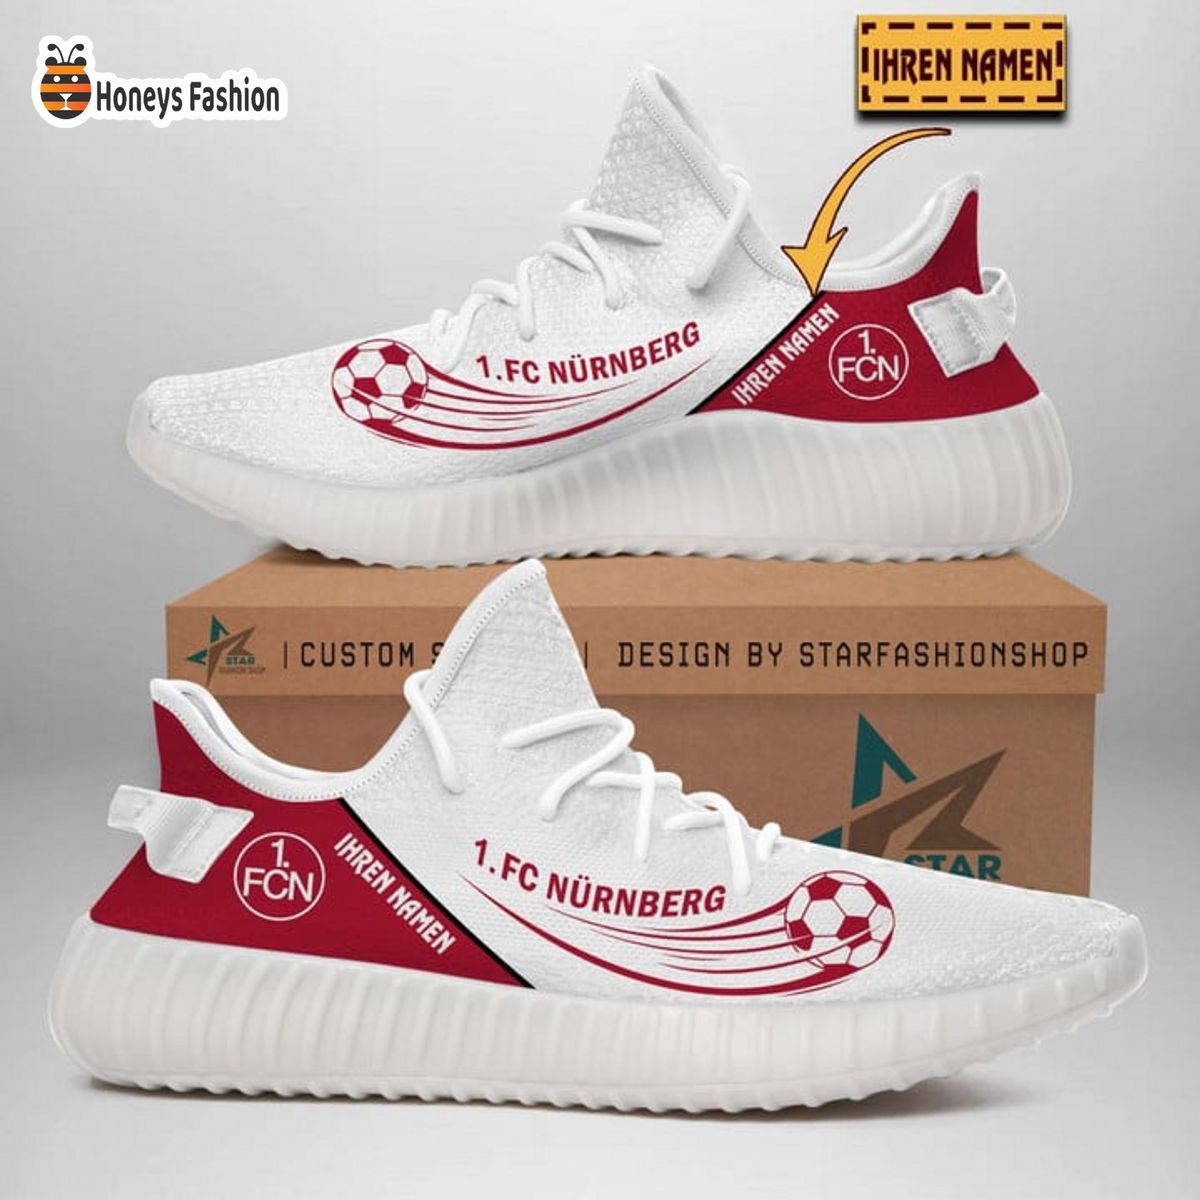 1. FC Nurnberg personalisiert yeezy sneaker